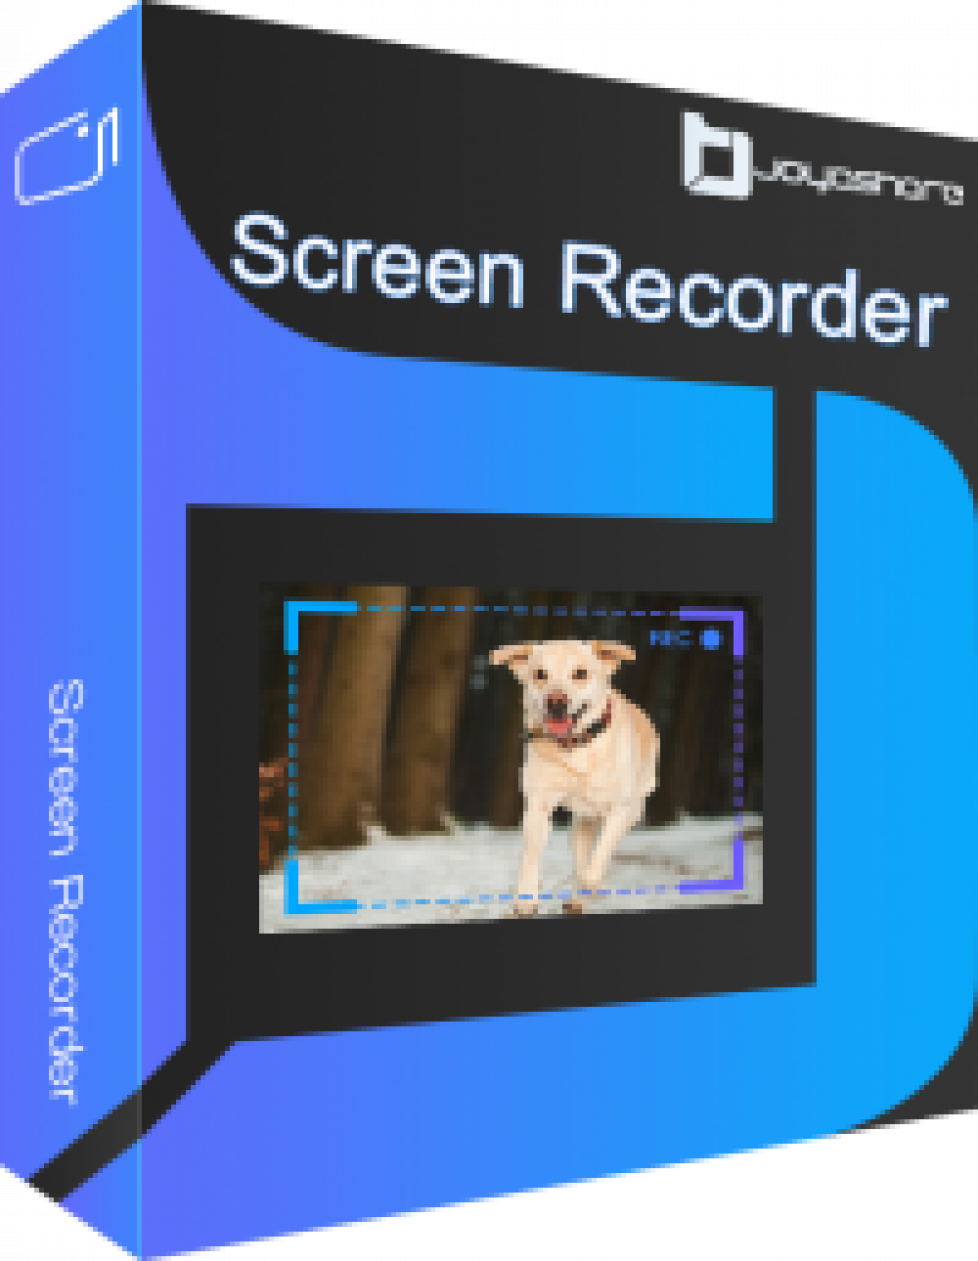 joyoshare screen recorder uninstall